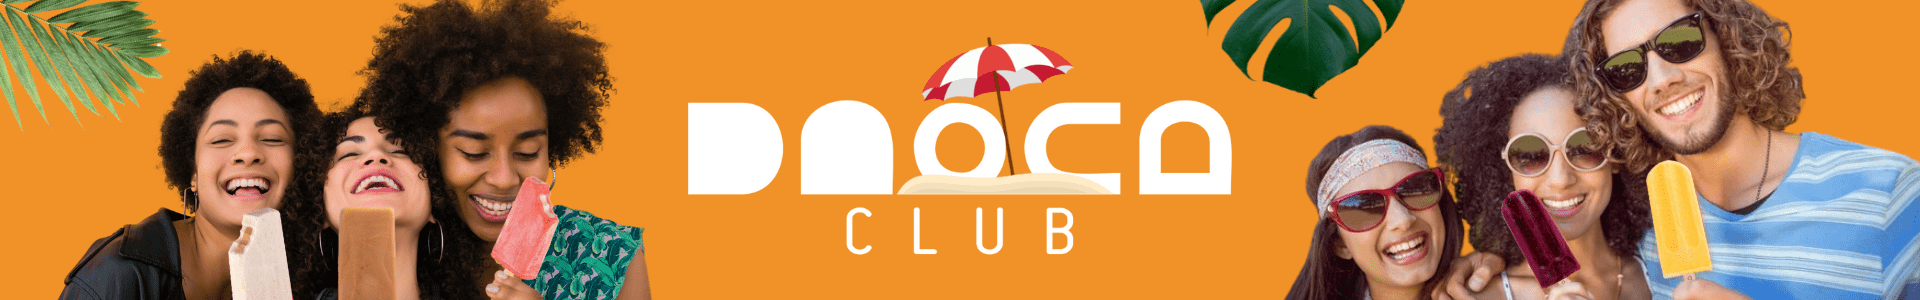 Club DaOca 1